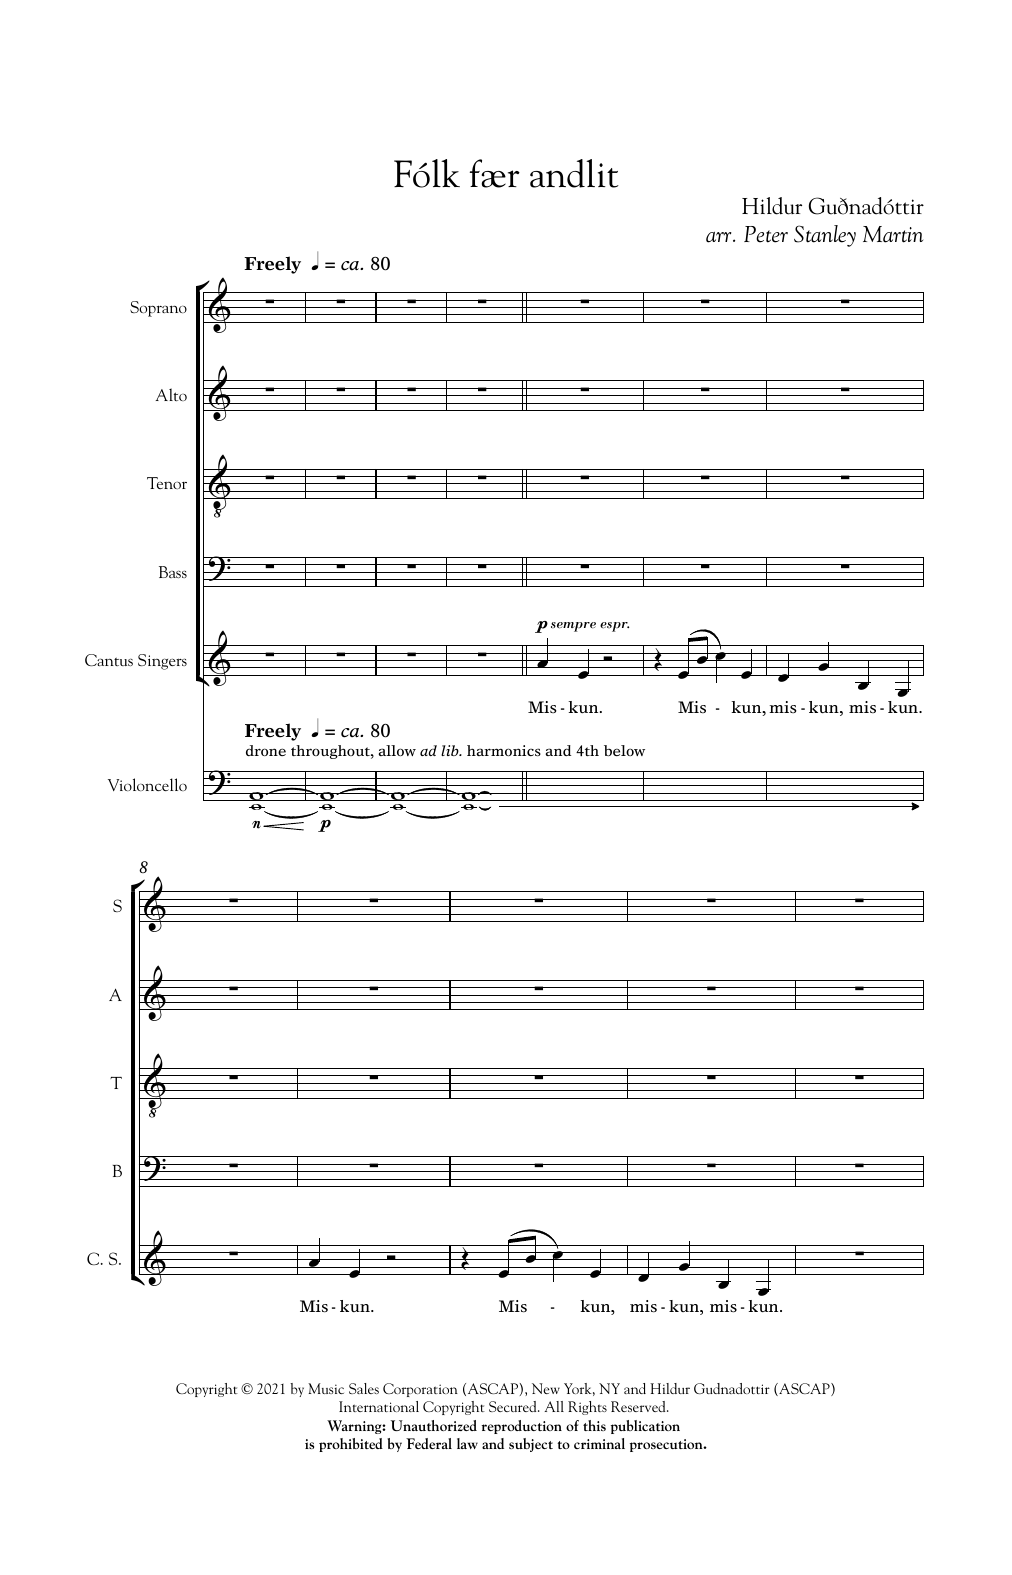 Hildur Gudnadottir Folk faer andlit (arr. Peter Stanley Martin) Sheet Music Notes & Chords for SATB Choir - Download or Print PDF